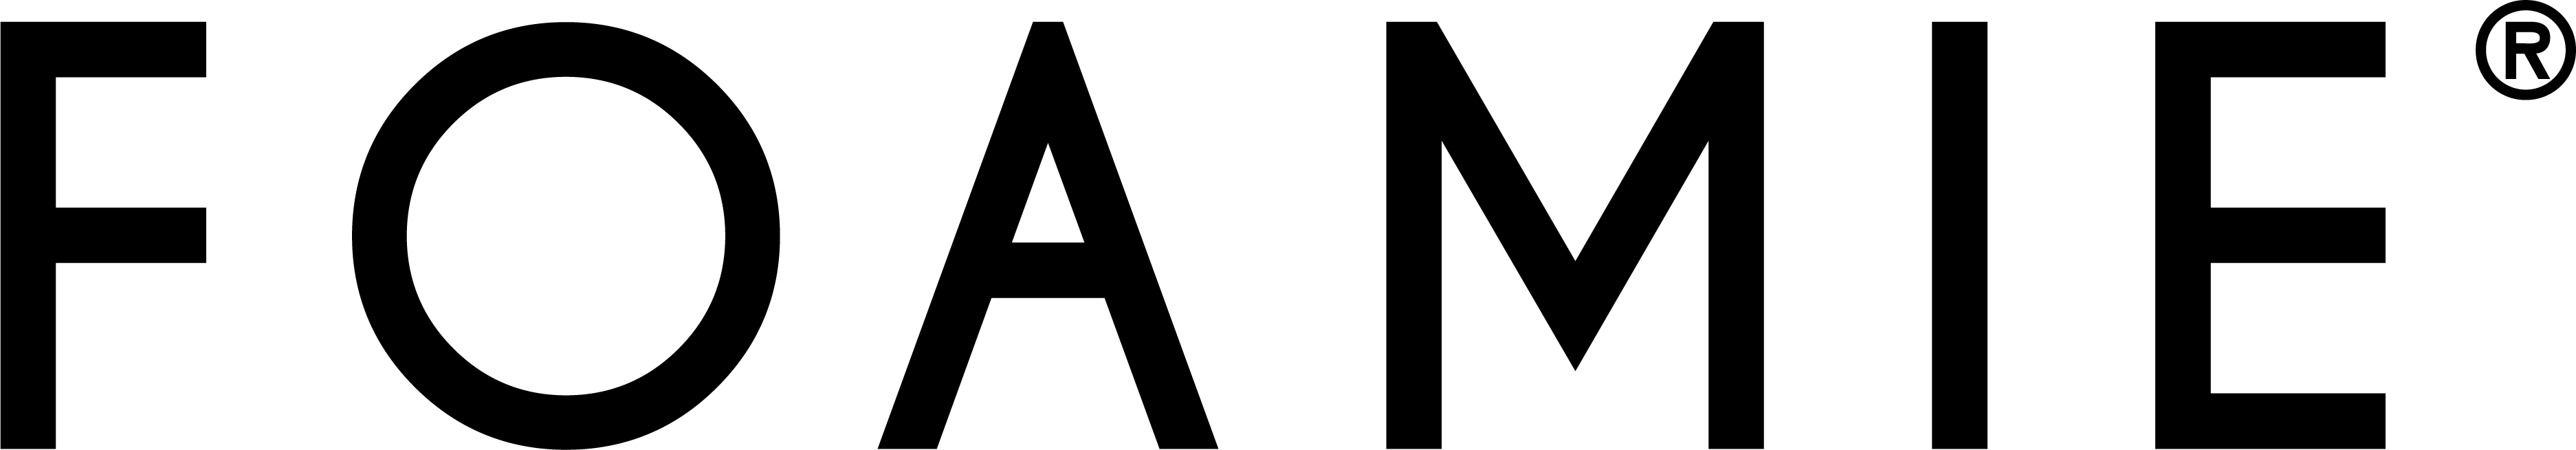 FOAMIE Logo